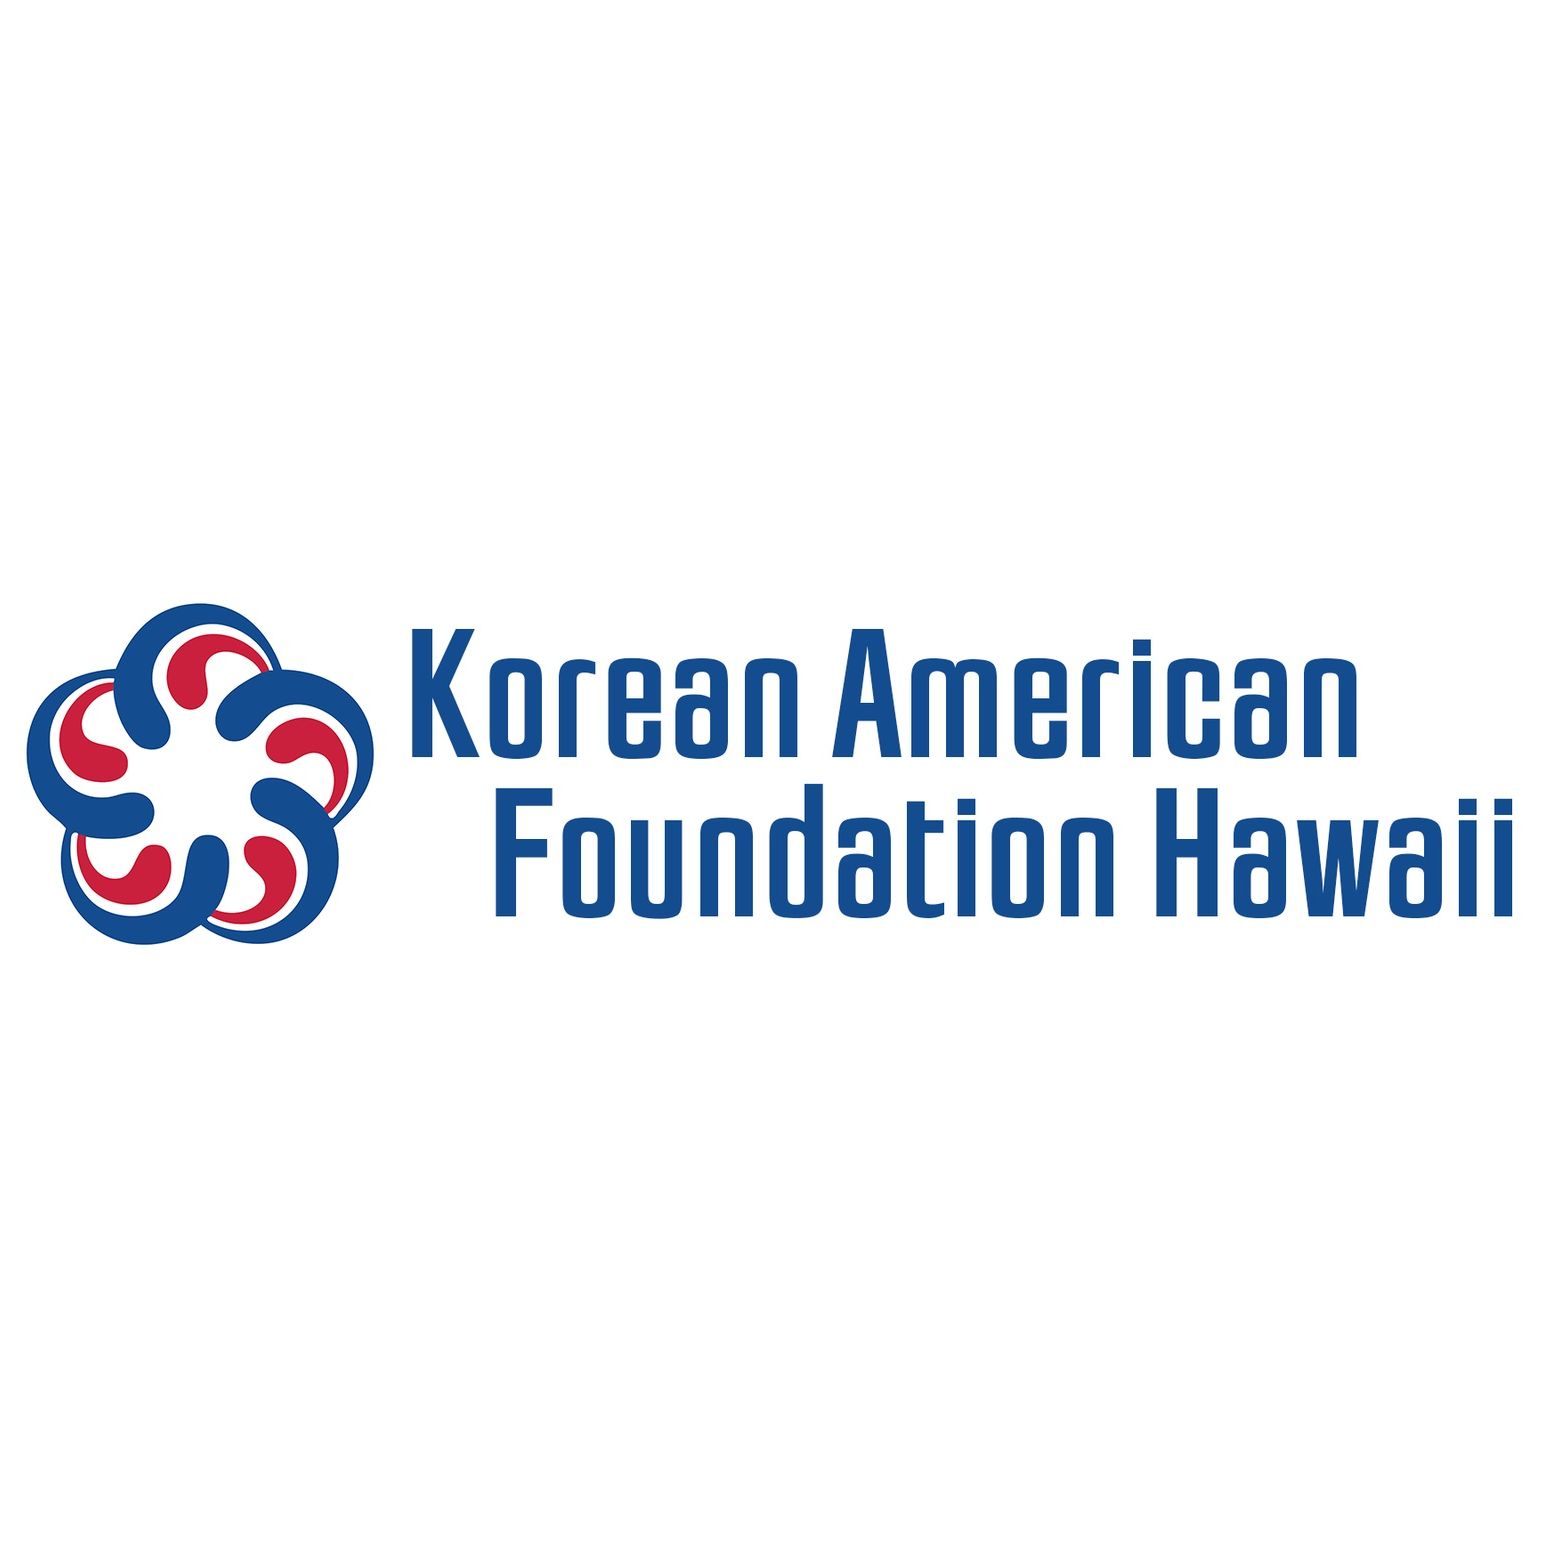 Korean Cultural Organizations in USA - Korean American Foundation Hawaii